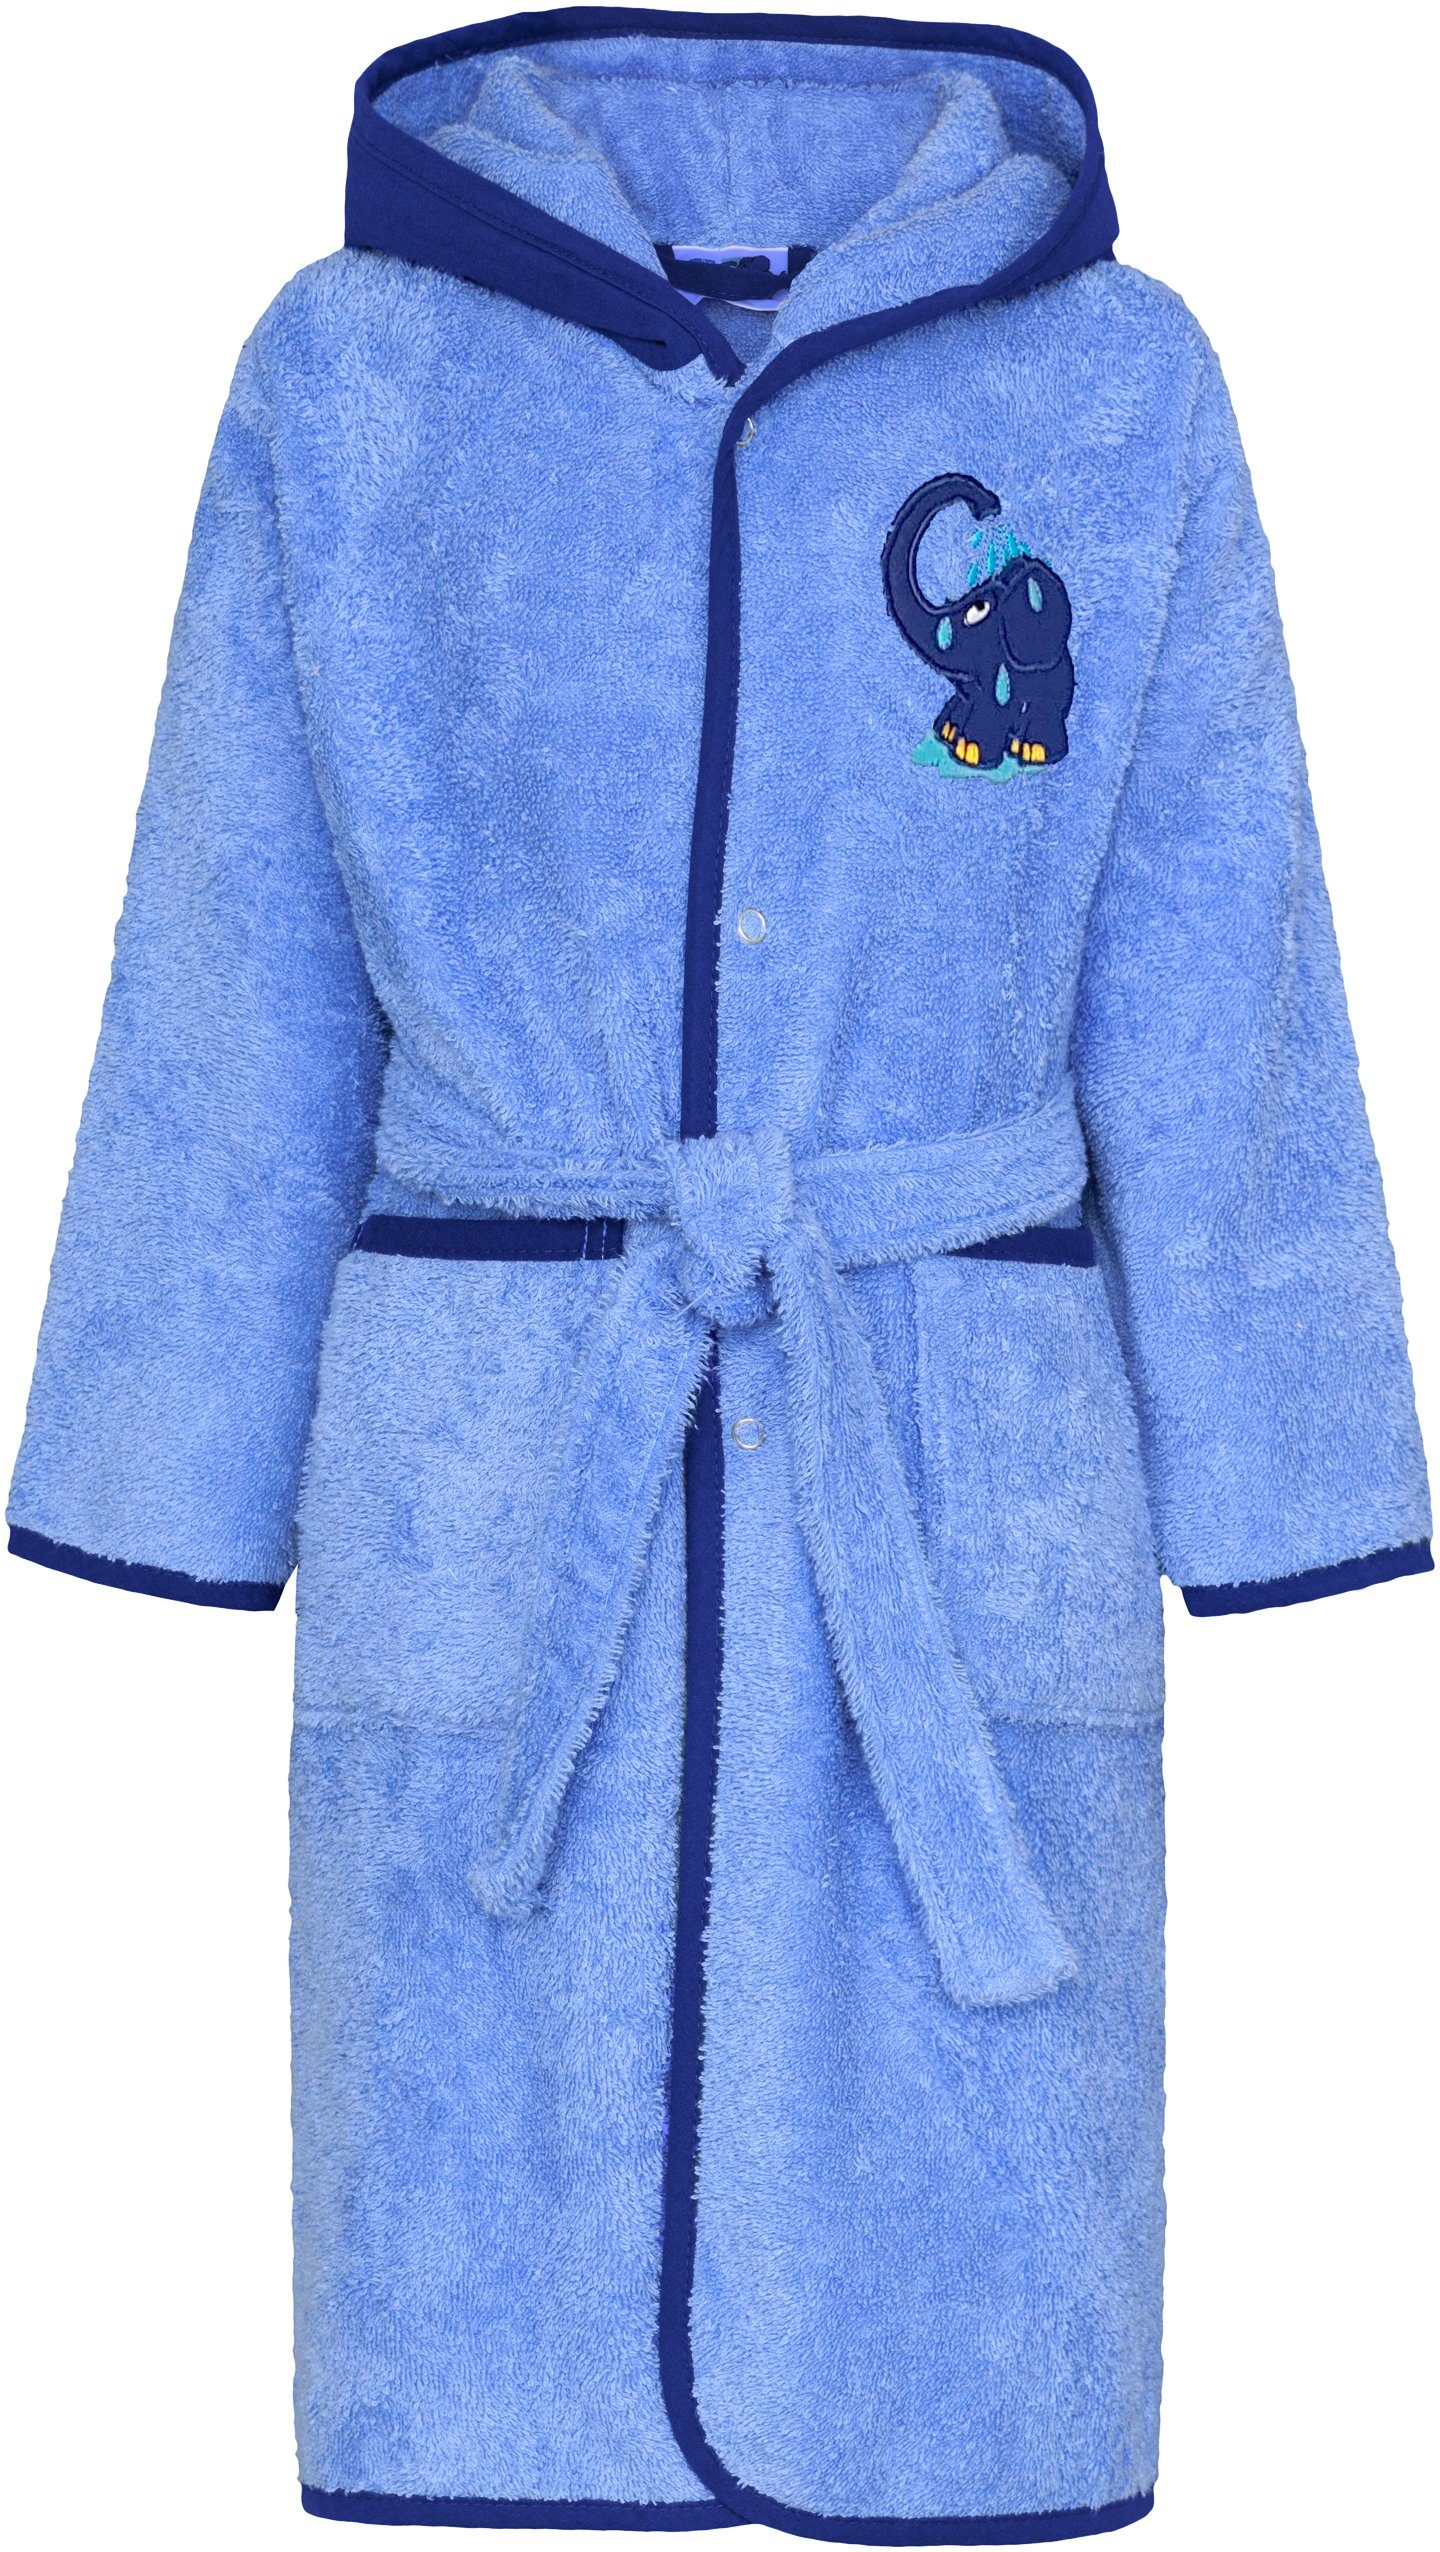 Smithy Kinderbademantel mit dem blauen Elefanten, Frottee, Kapuze, Gürtel, Knöpfe, made in Europe